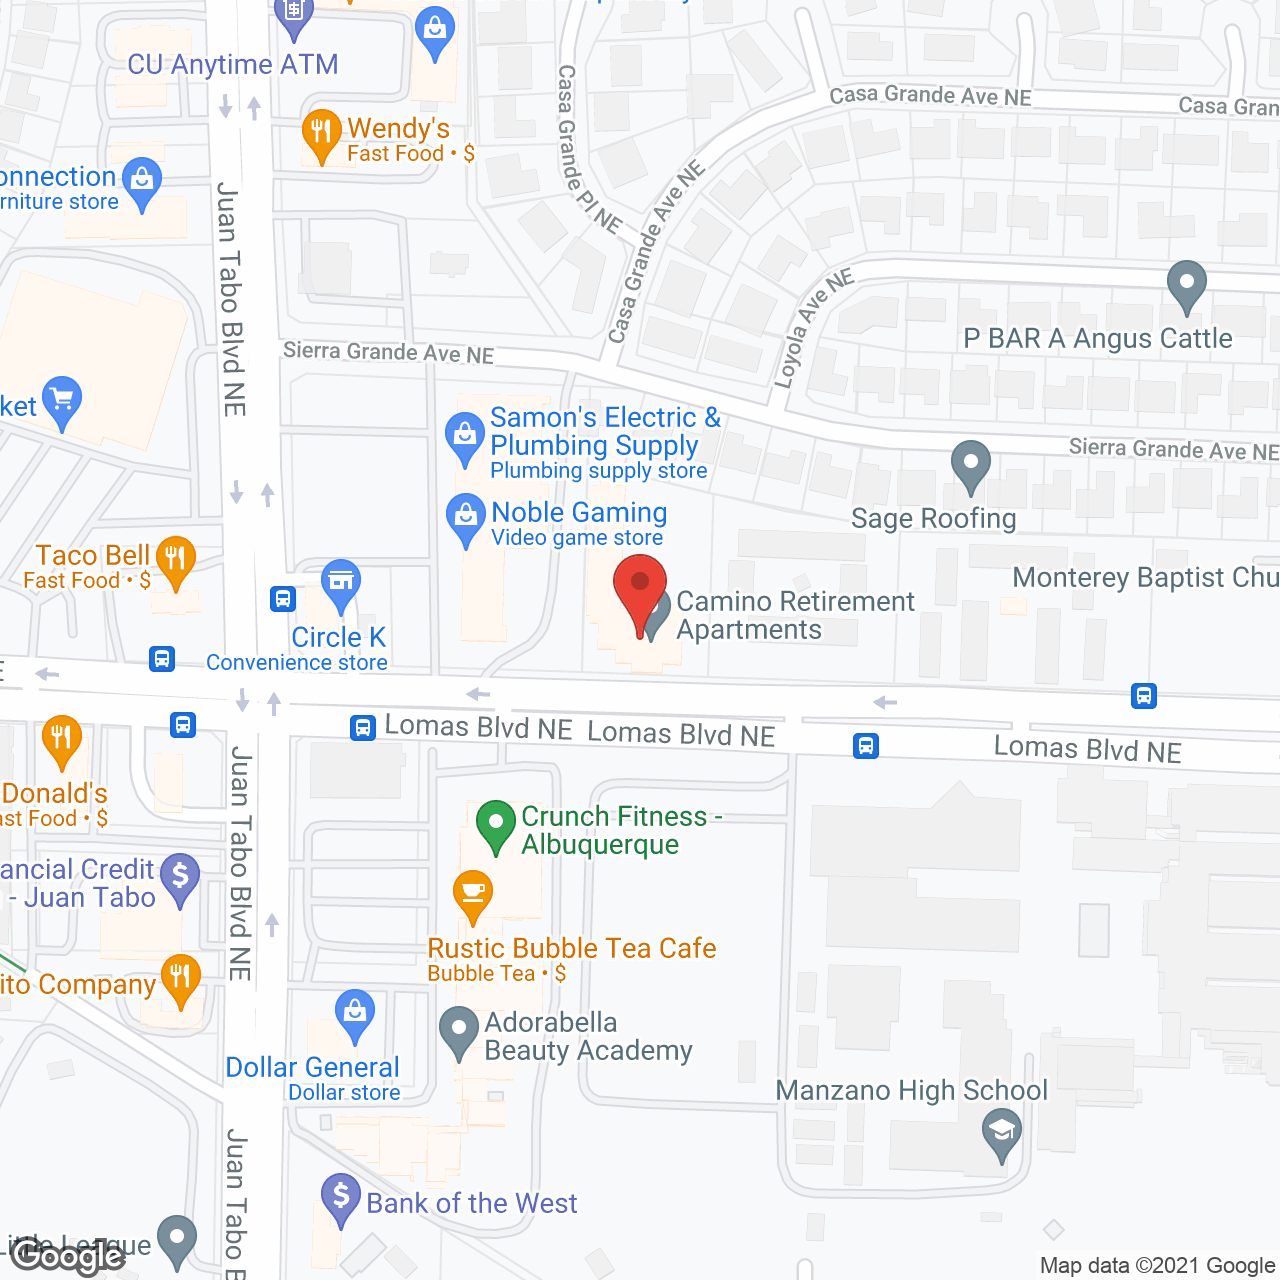 Camino Retirement Apartments in google map